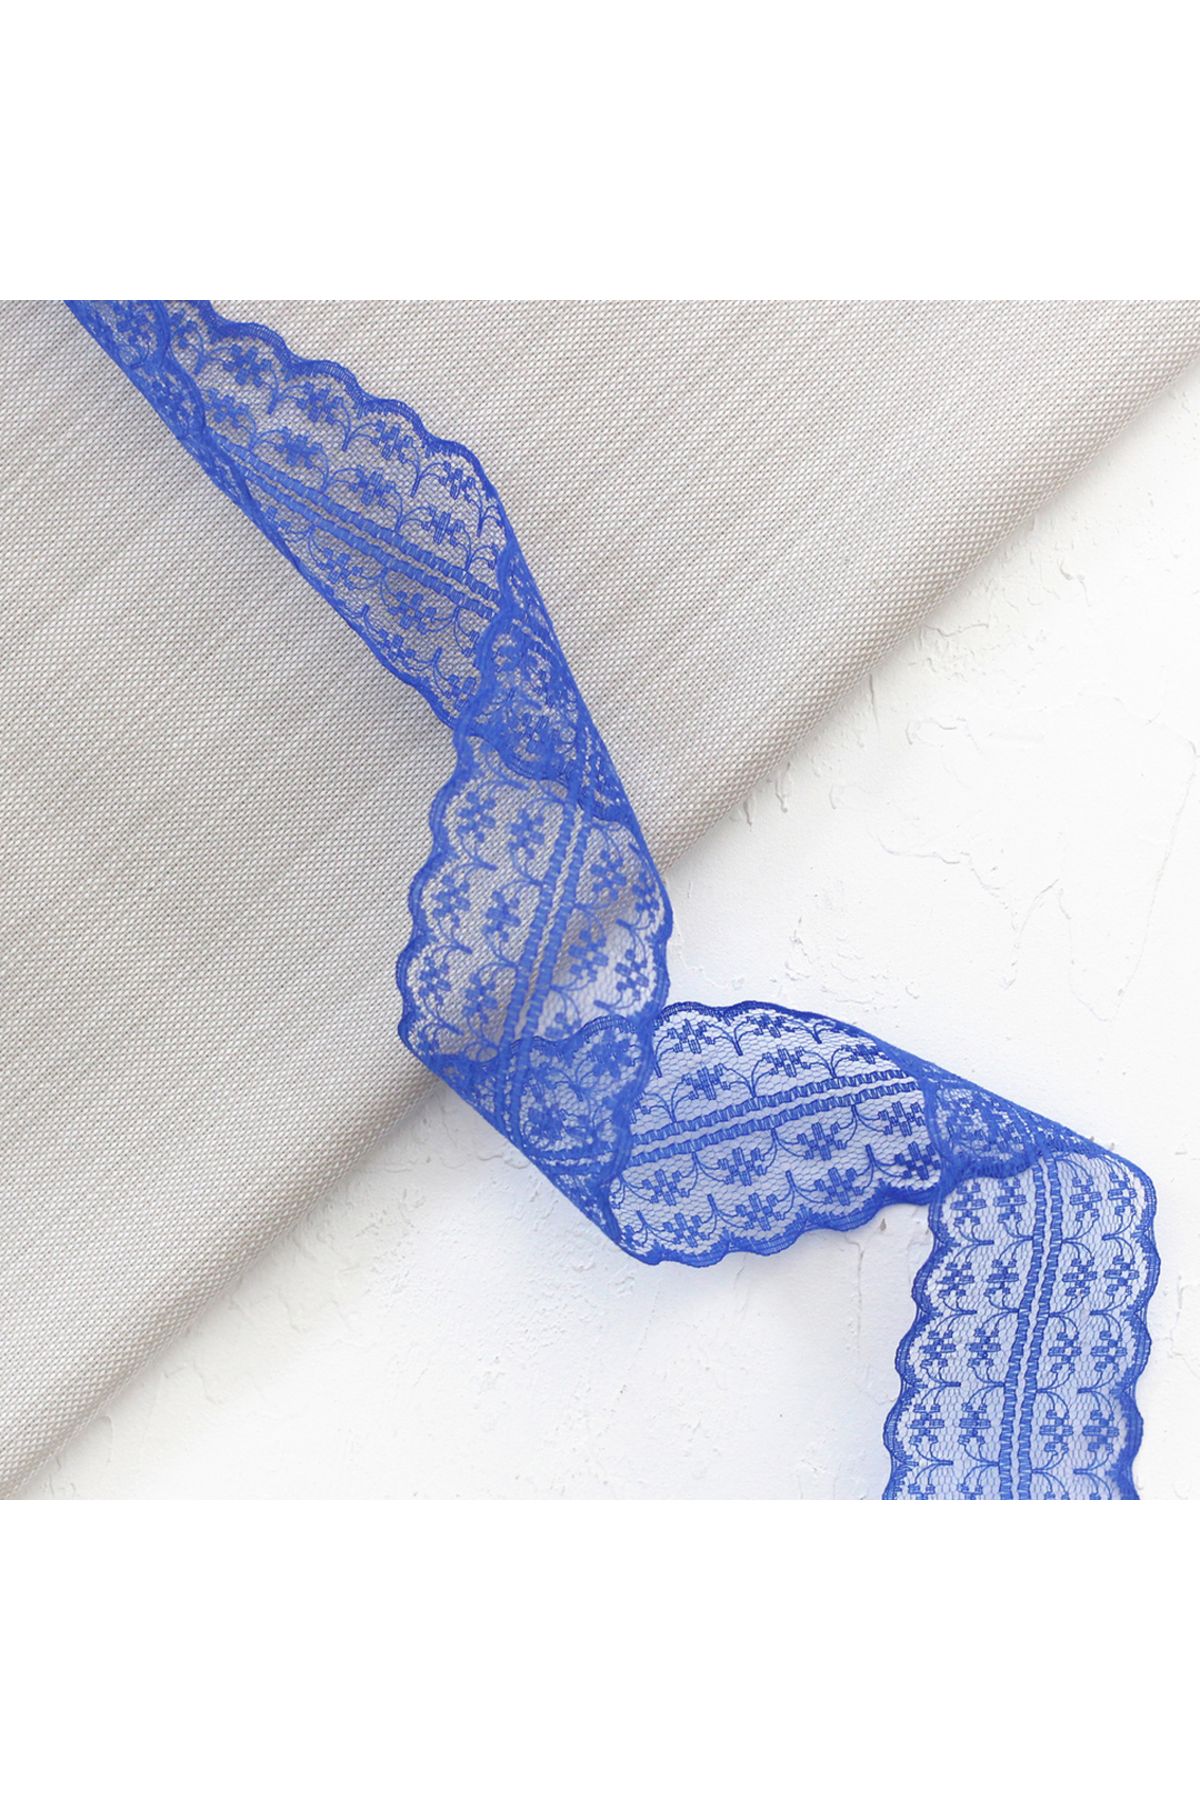 Bimotif Saks mavi renkli, 4.5 cm genişliğinde dantel şerit, 5 metre